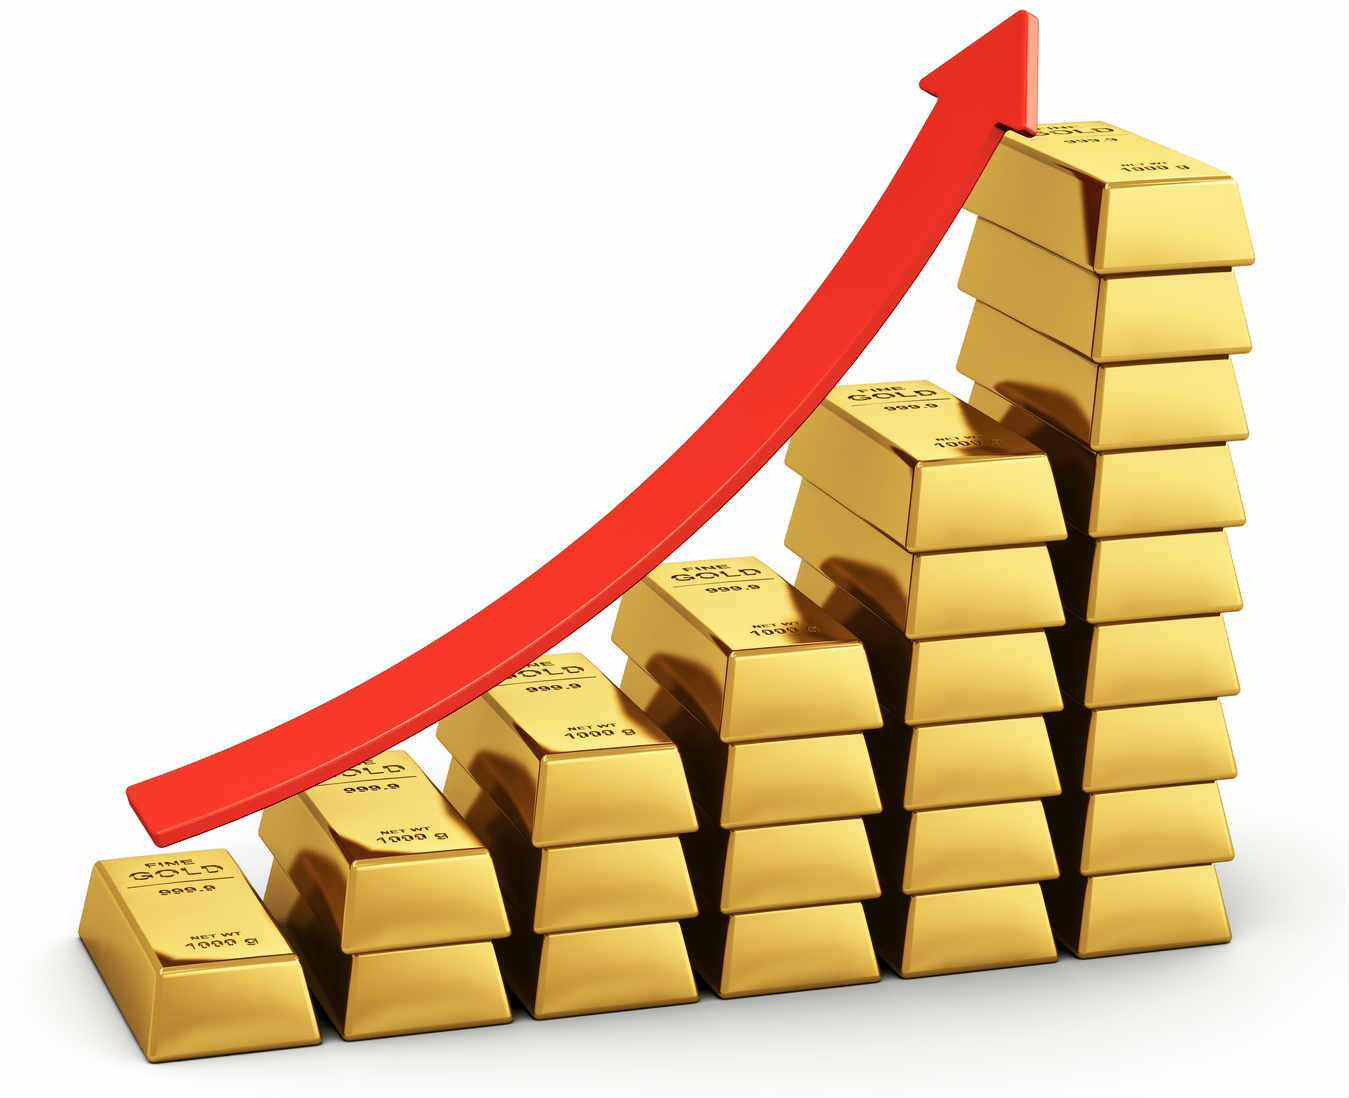 Gold traded at Rs 91,400 per tola